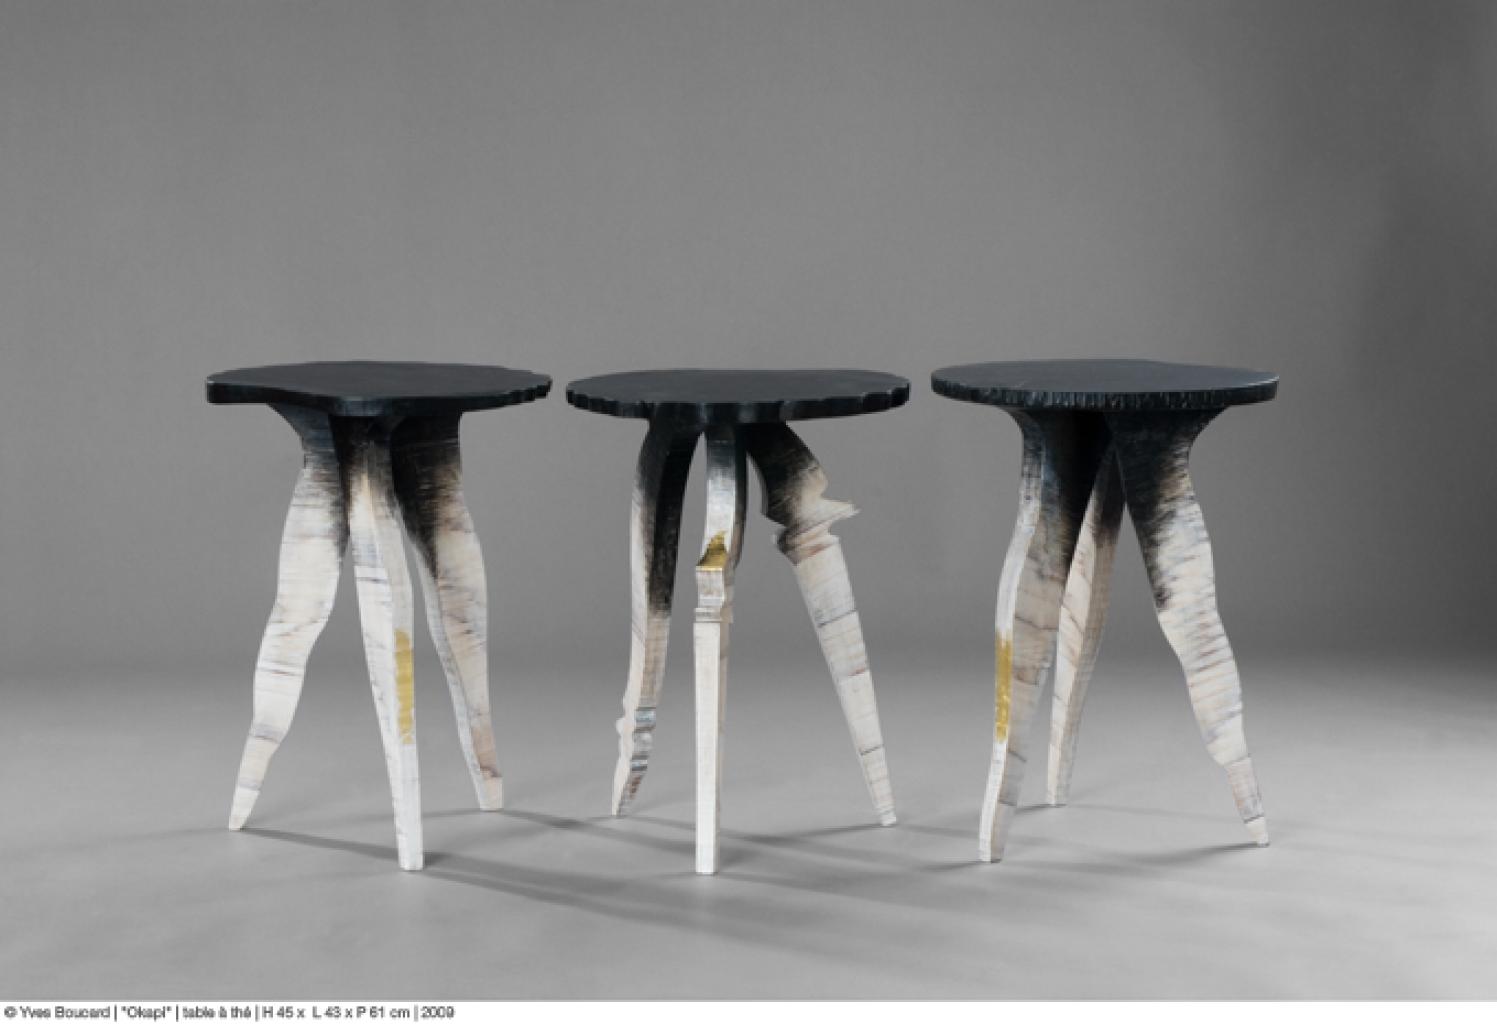 "Okapi" | Tea table | 45 x 45 x 61 cm | 2009